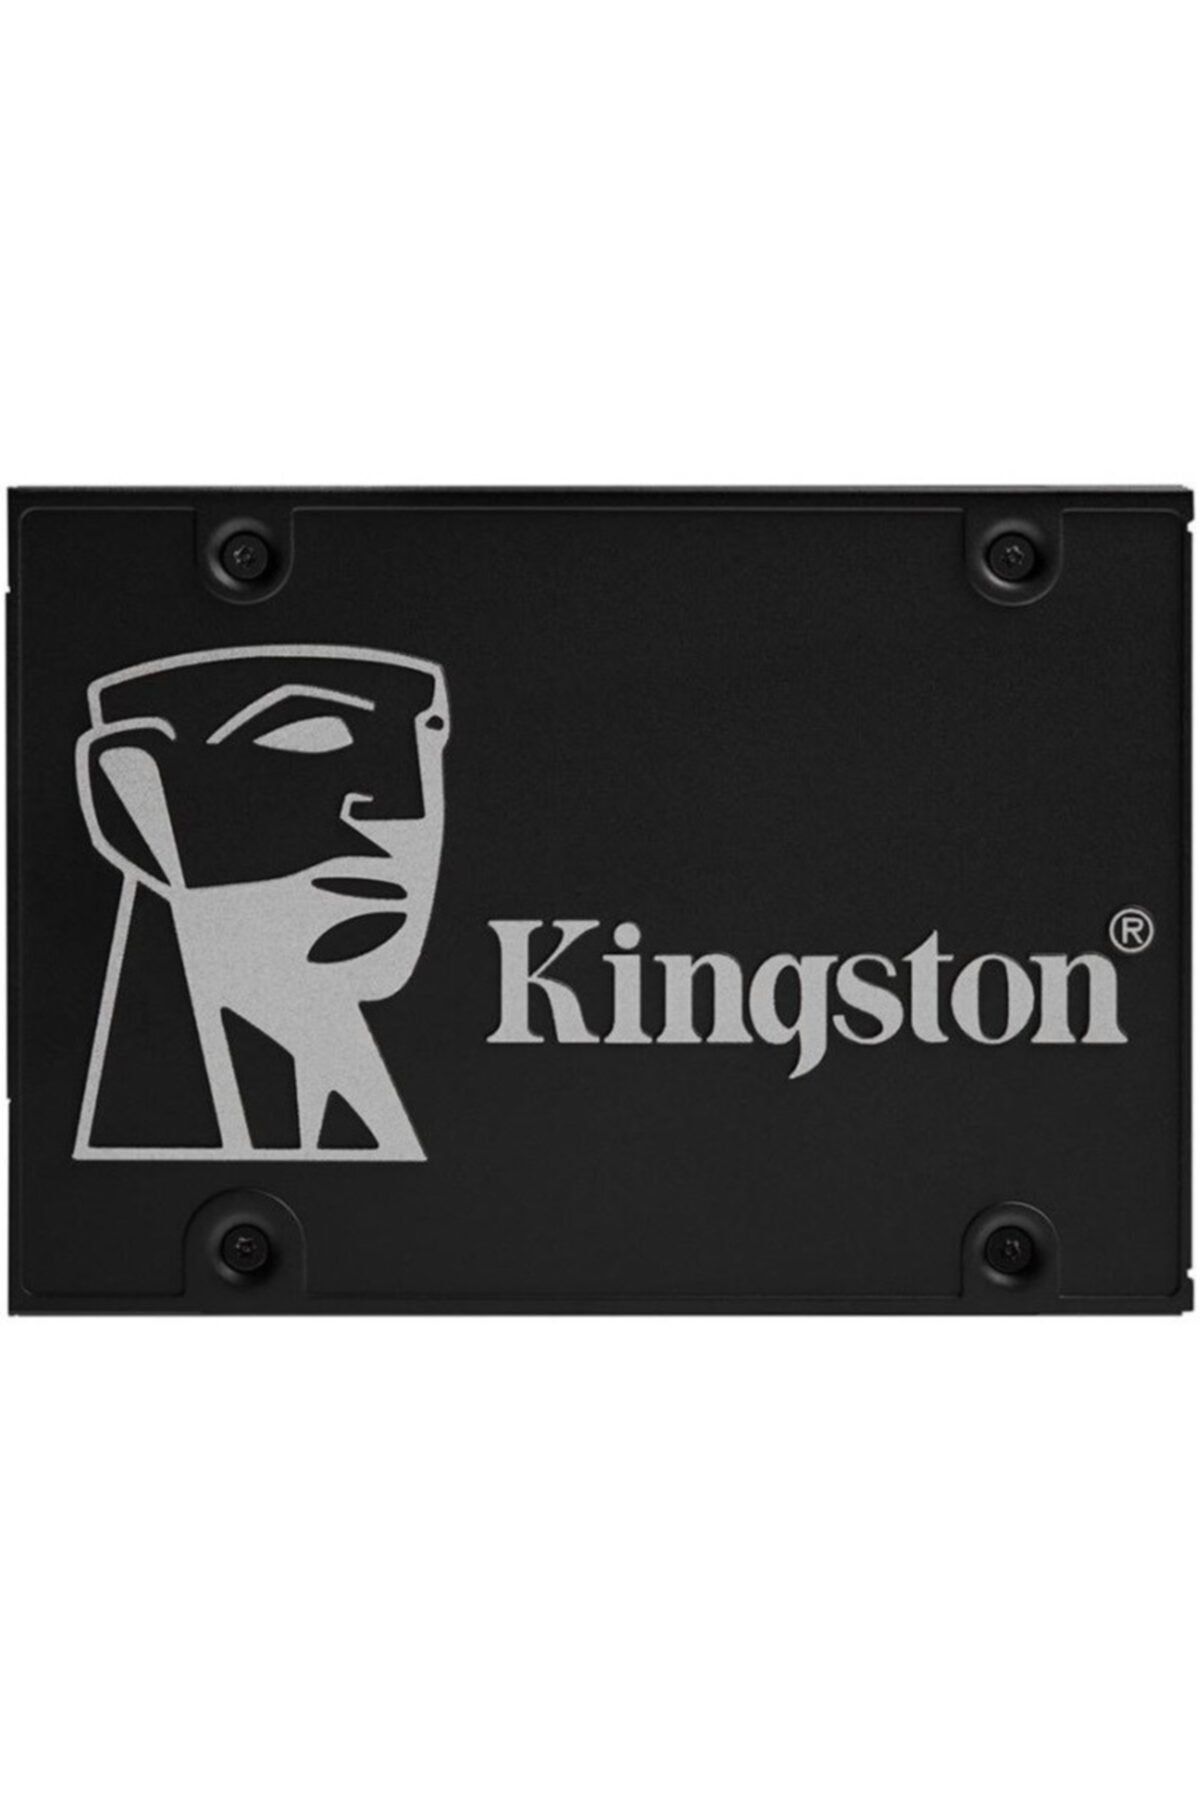 Kingston 256gb Kc600 550/500mb Skc600/256g